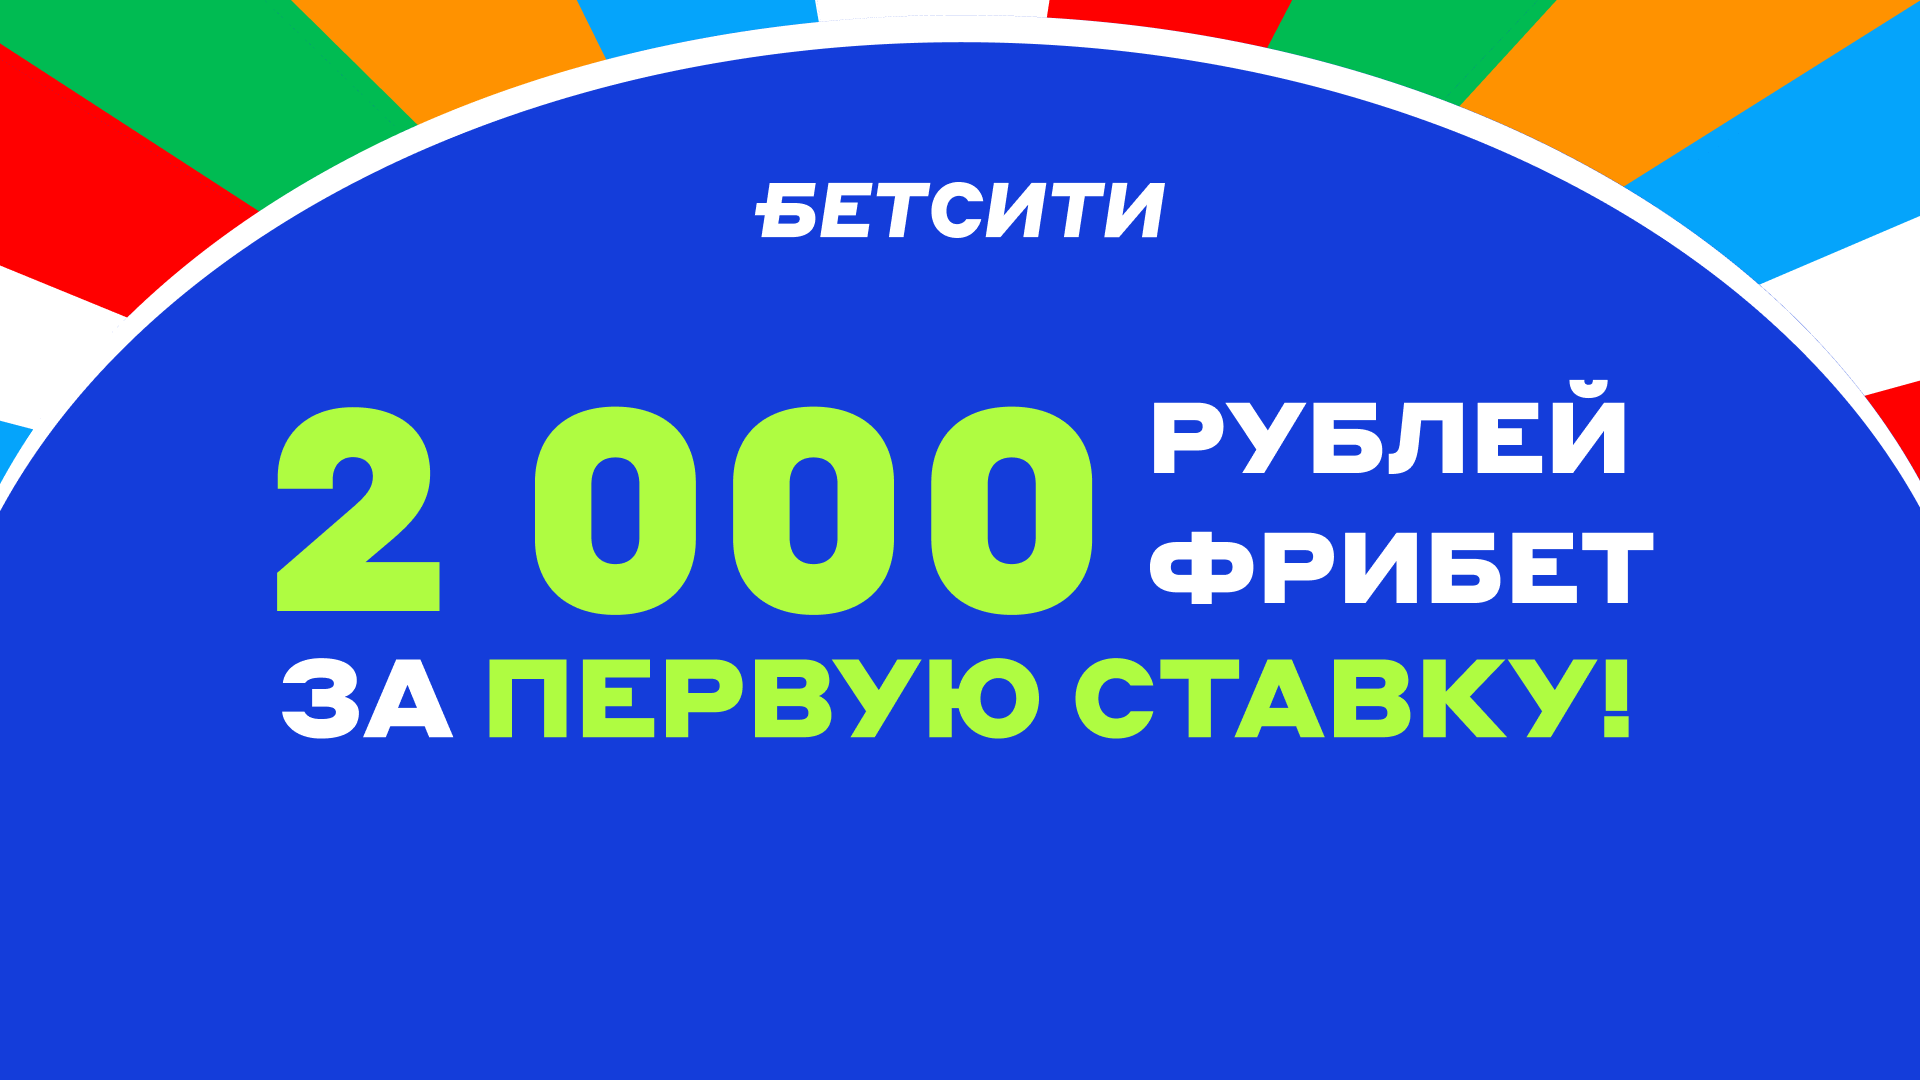 Промокод в БЕТСИТИ: фрибет на 2000 рублей за ставку